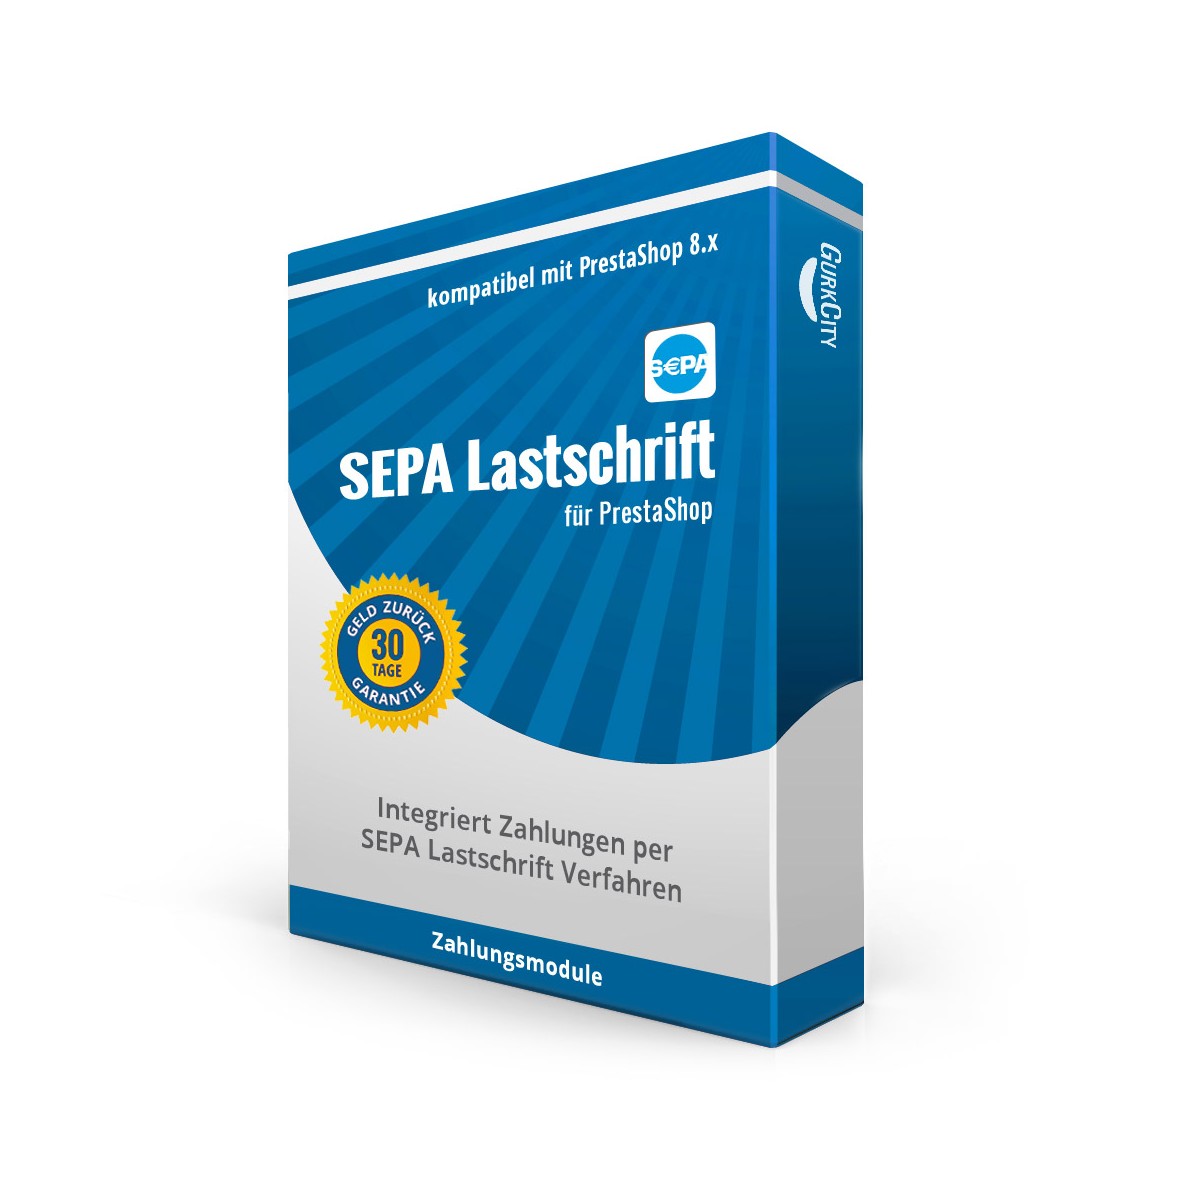 SEPA Lastschrift PrestaShop 8.x